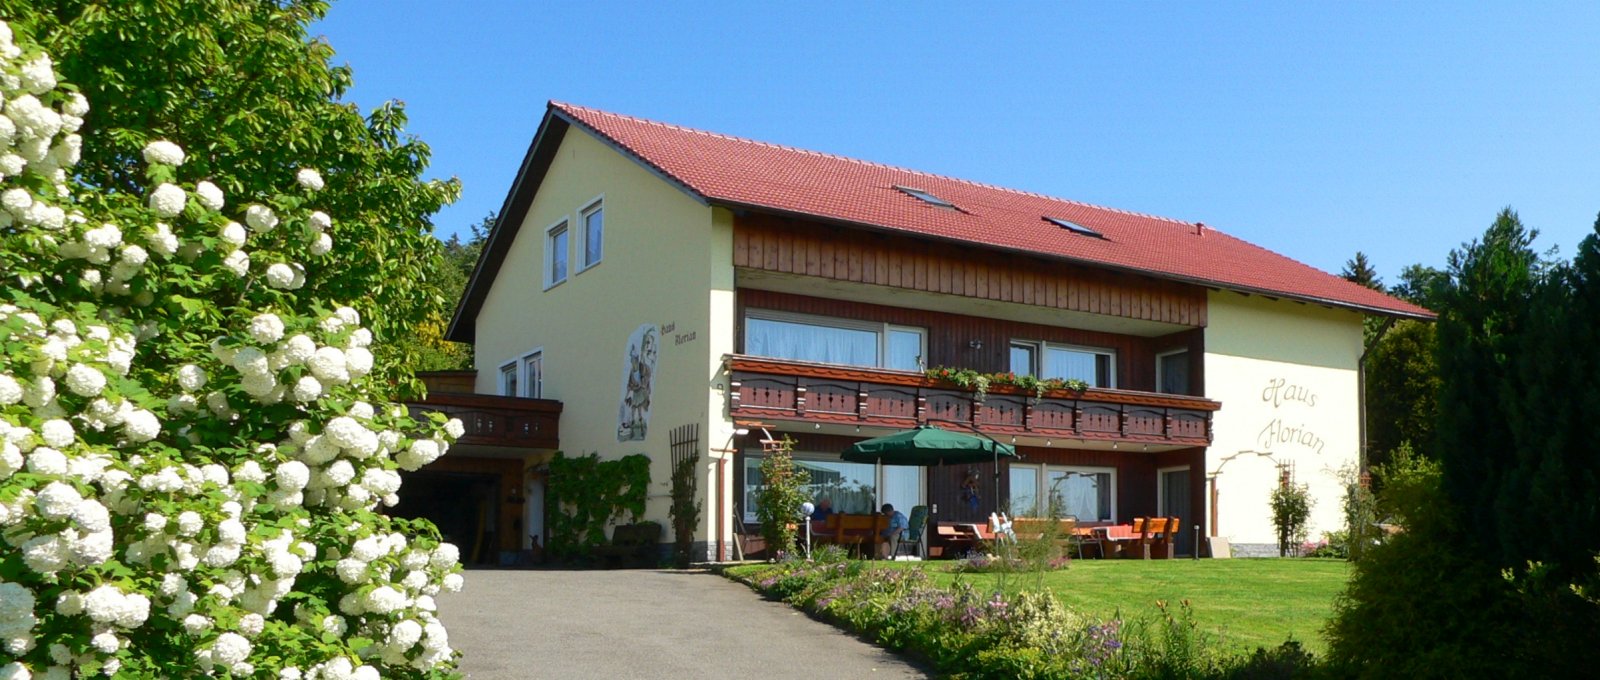 4 Sterne Familien Pension Haus Florian in Waldmünchen